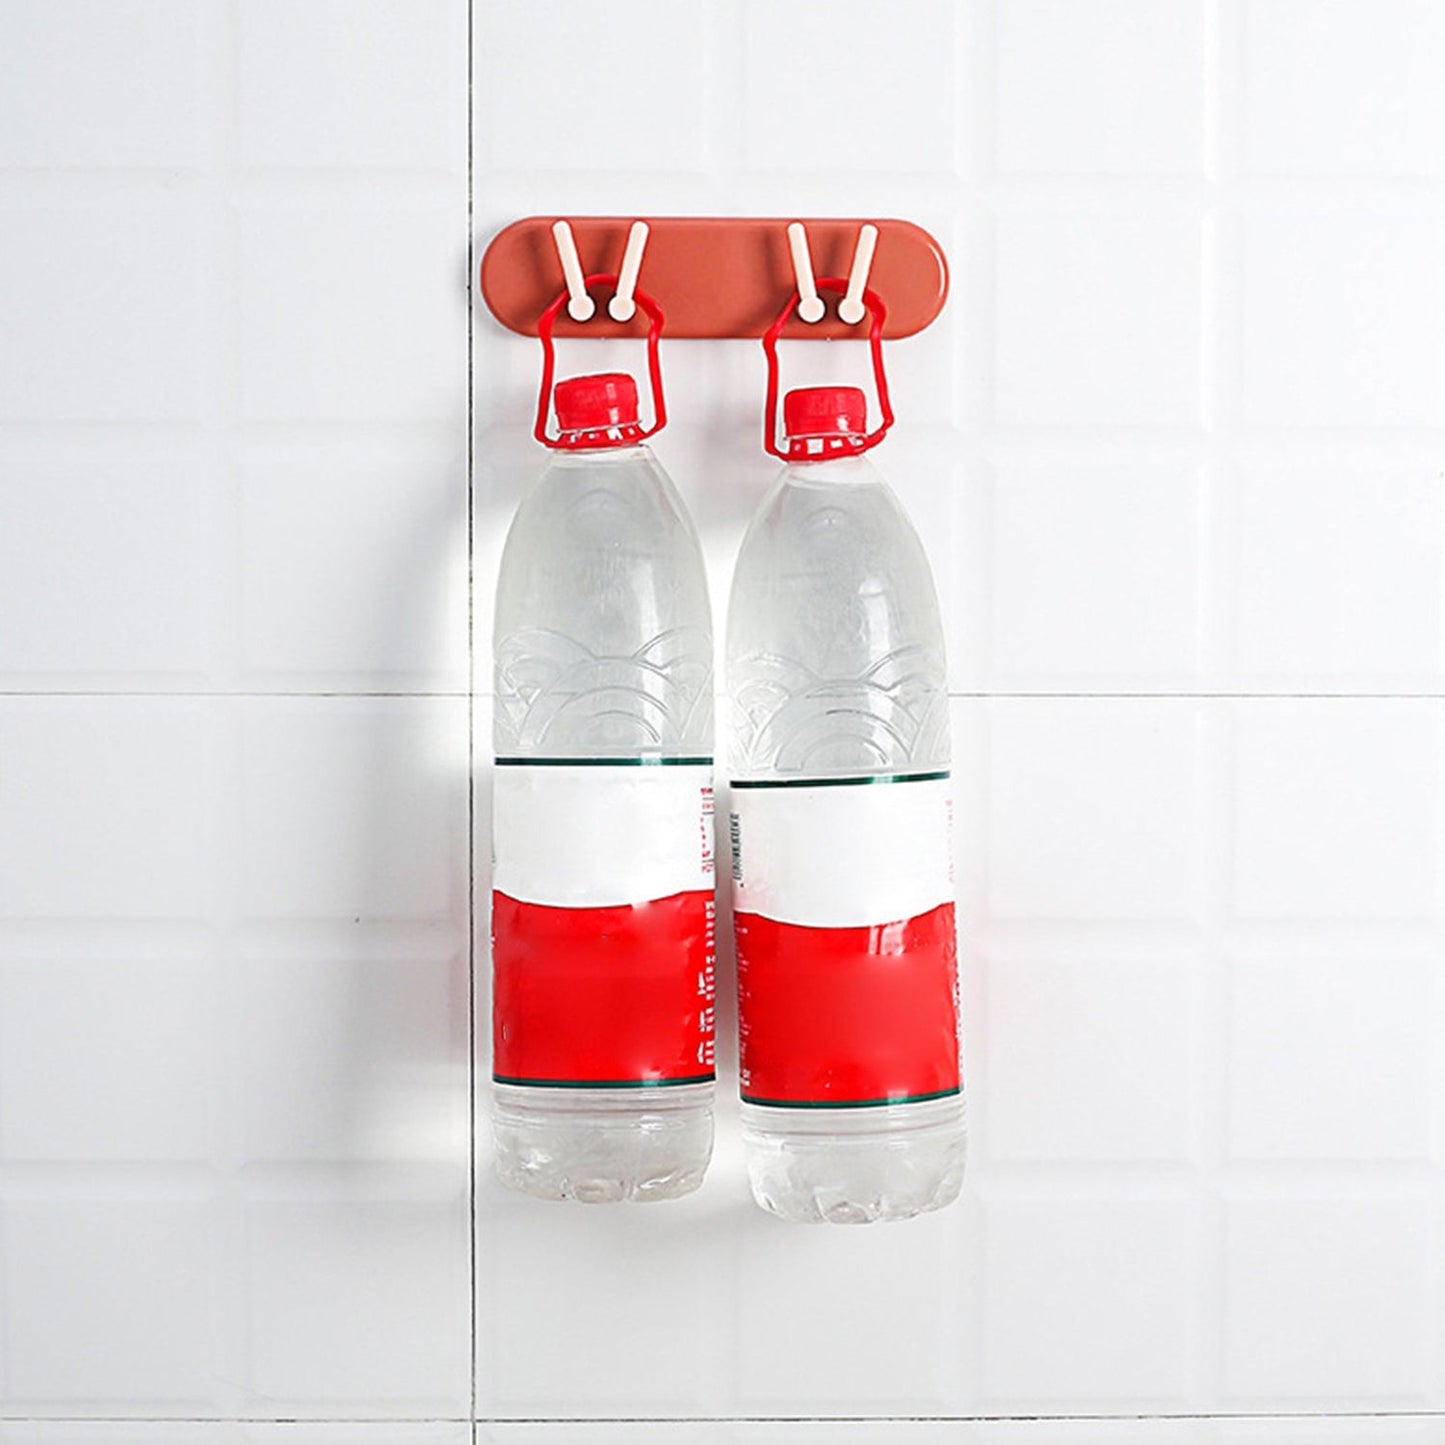 4703 Plastic Multipurpose Holder Bathroom Accessories Organizer Wall Mounted Hanging Mount Shelf & Hooks (1pc)